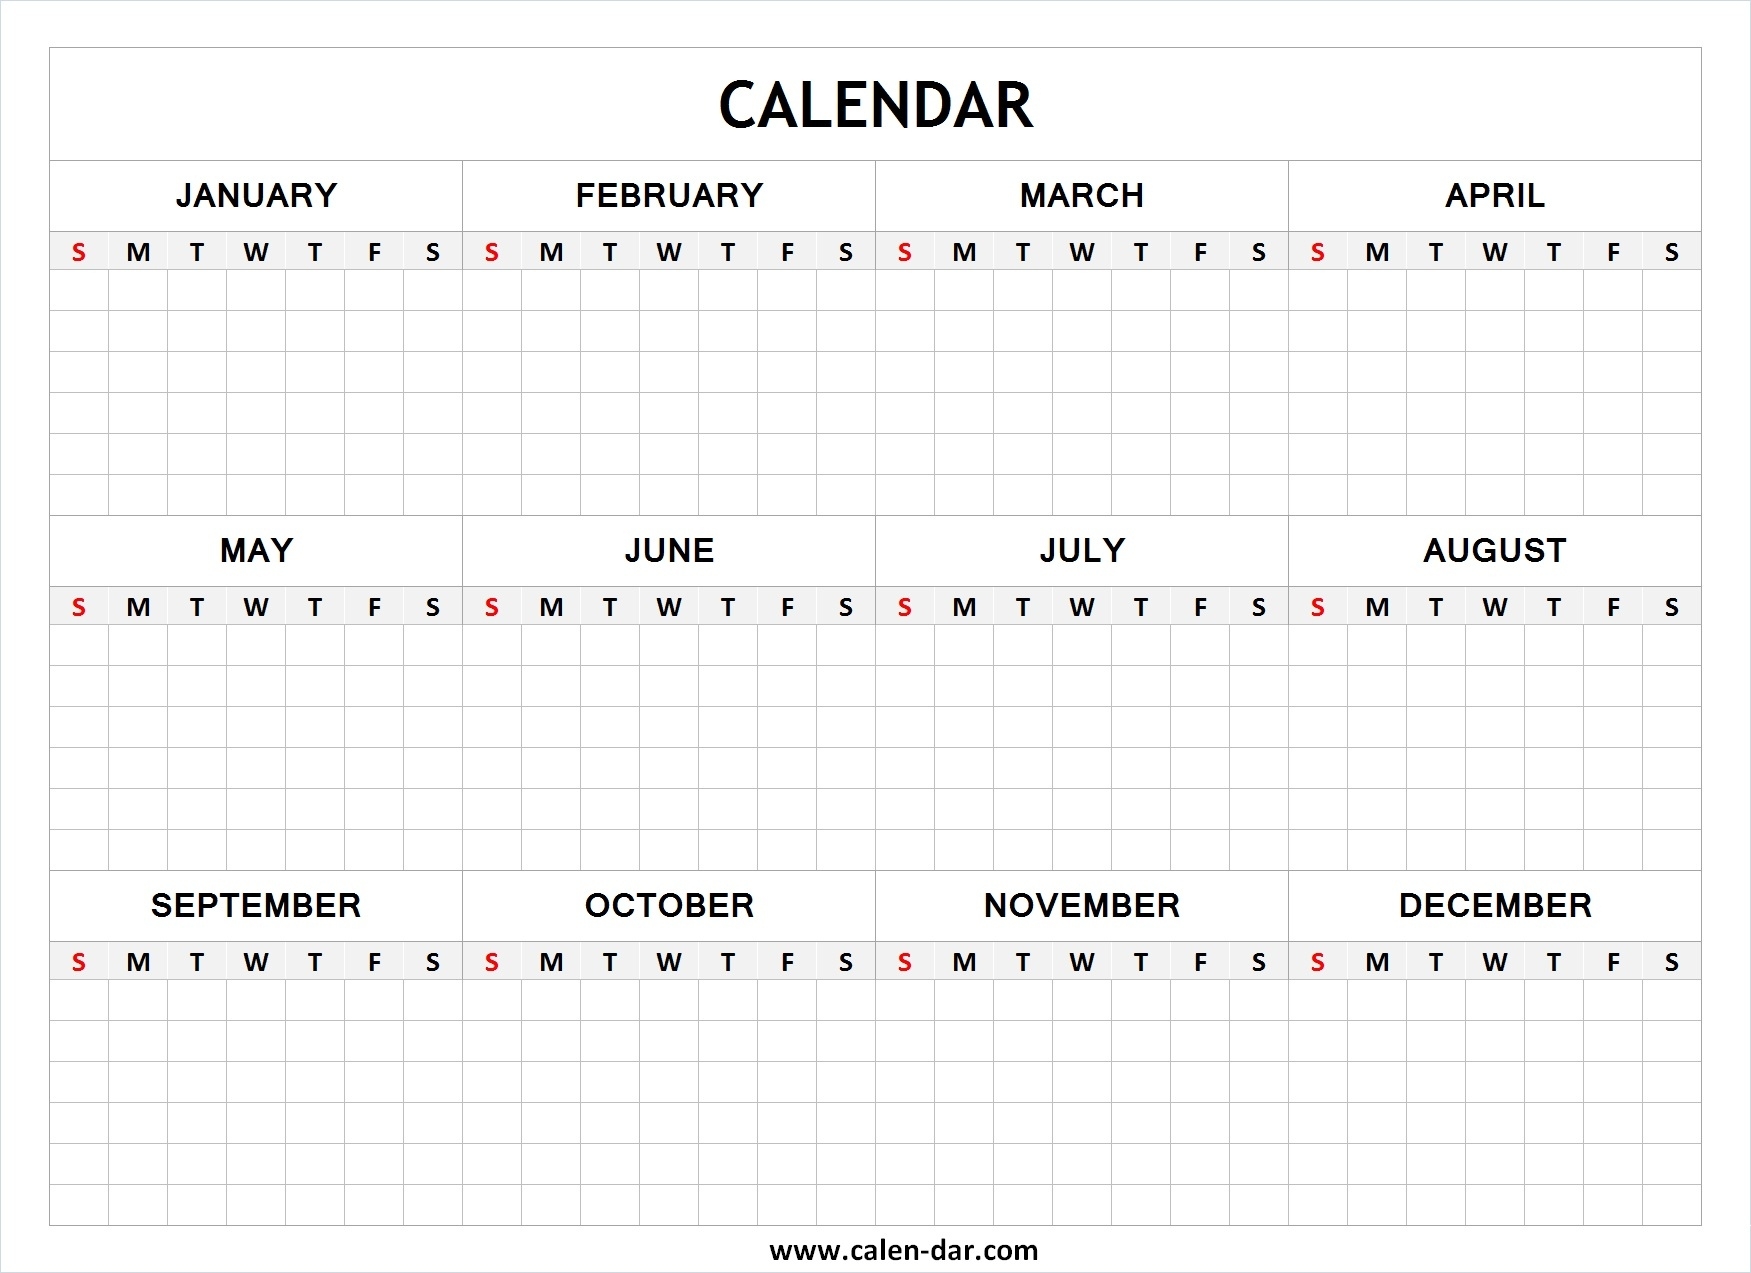 Yearly Calendar Blank | Year Printable Calendar Year Calendar Template Blank